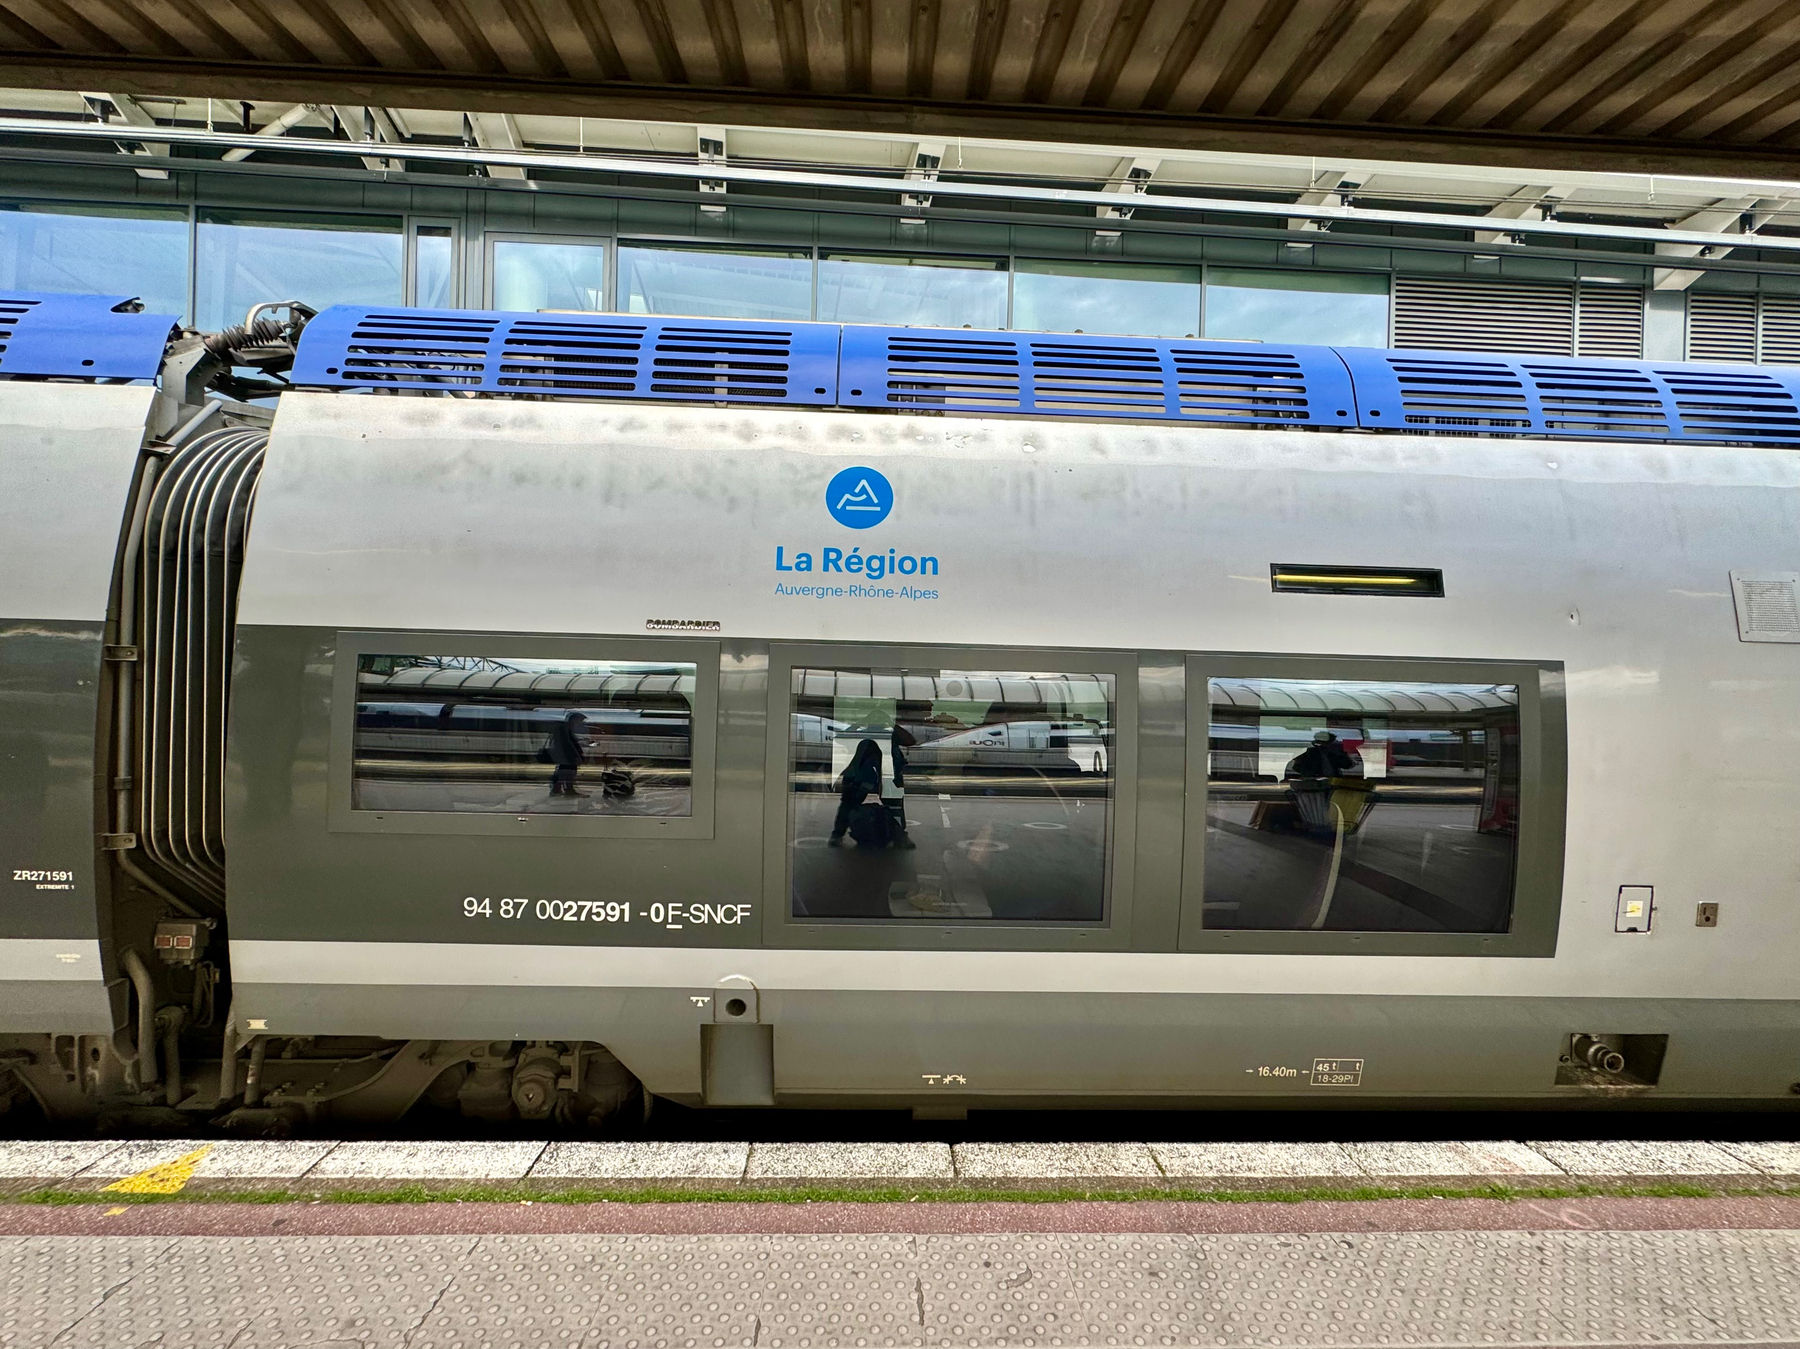 A regional train with “La Région Auvergne-Rhône-Alpes” on its side, parked at a station platform.